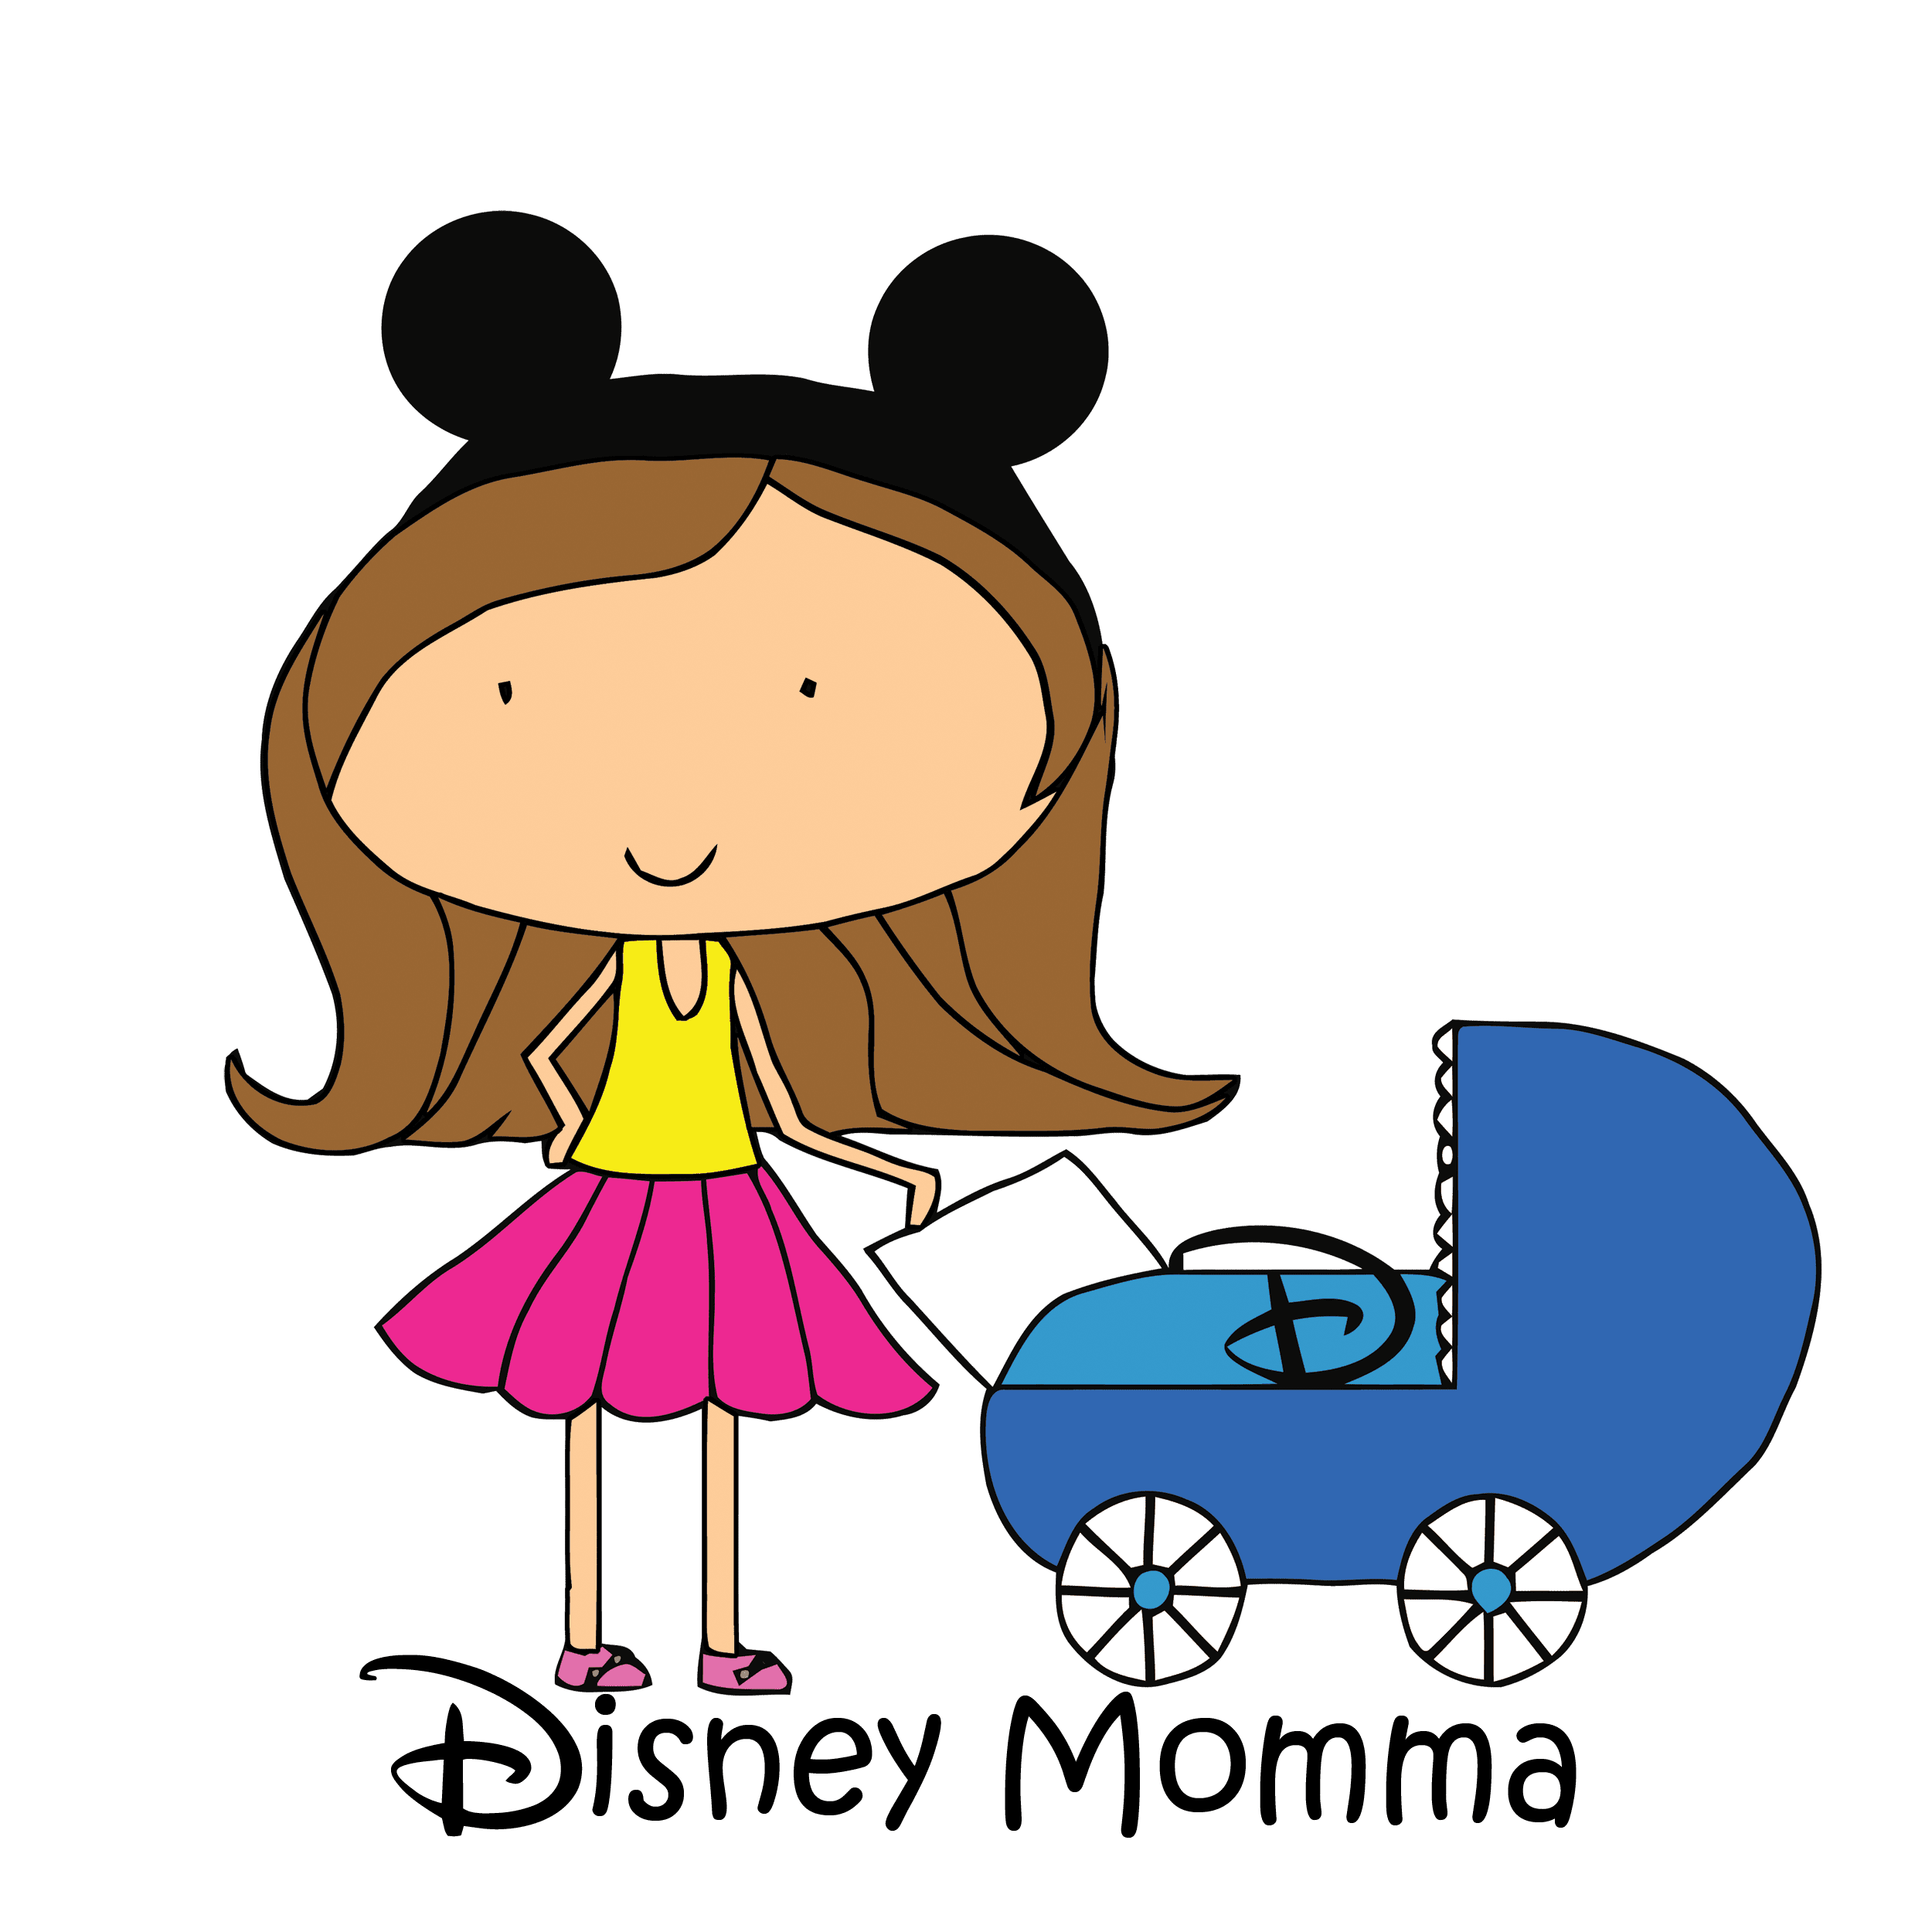 Disney Momma